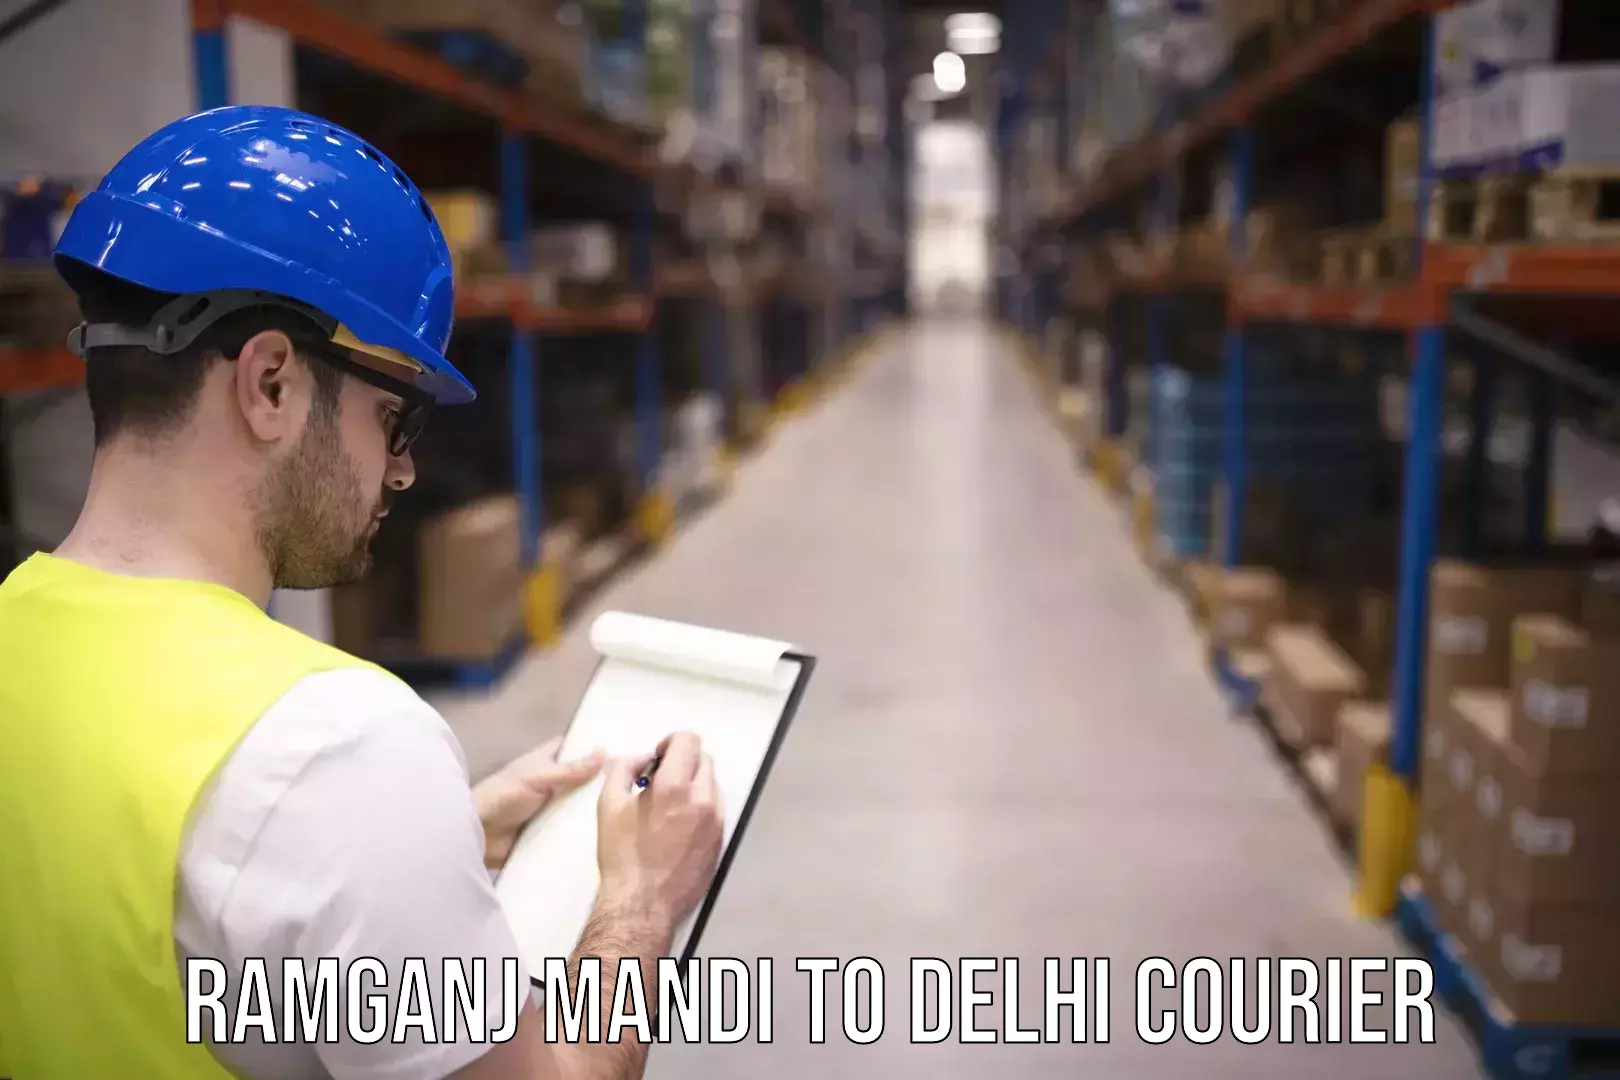 Courier service innovation Ramganj Mandi to University of Delhi